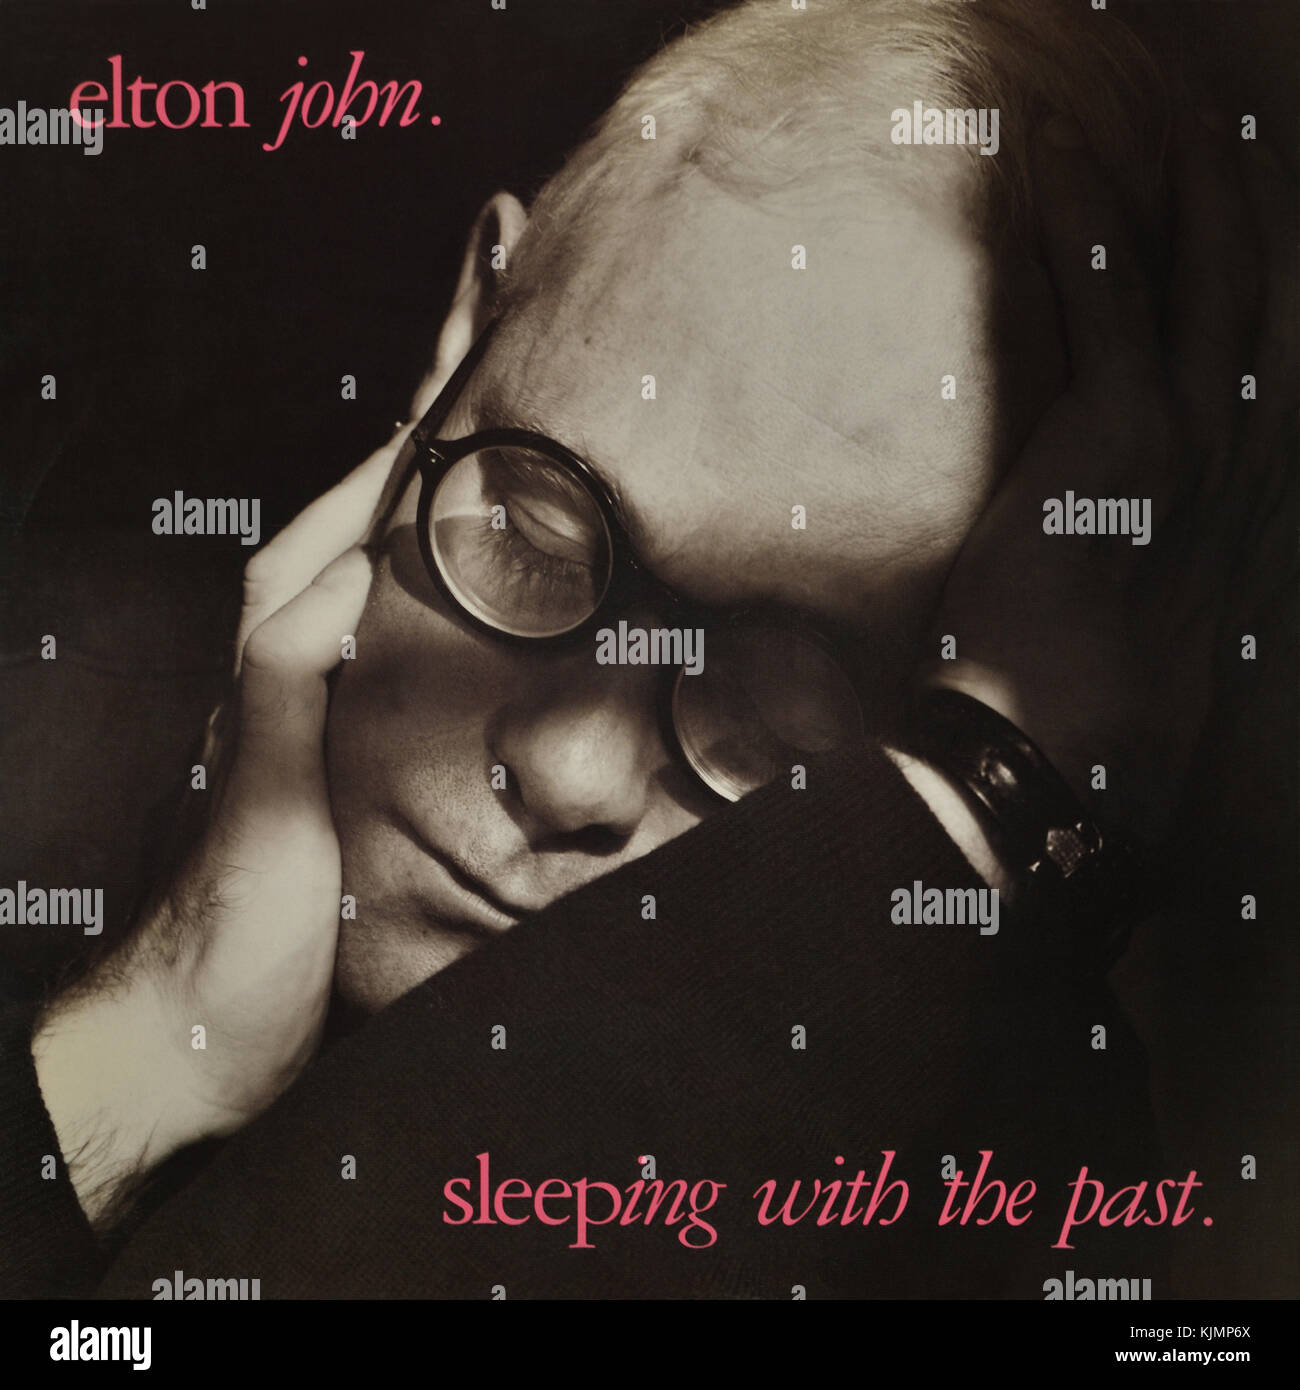 Elton John - original vinyl album cover - Sleeping with the past - 1989 Stock Photo